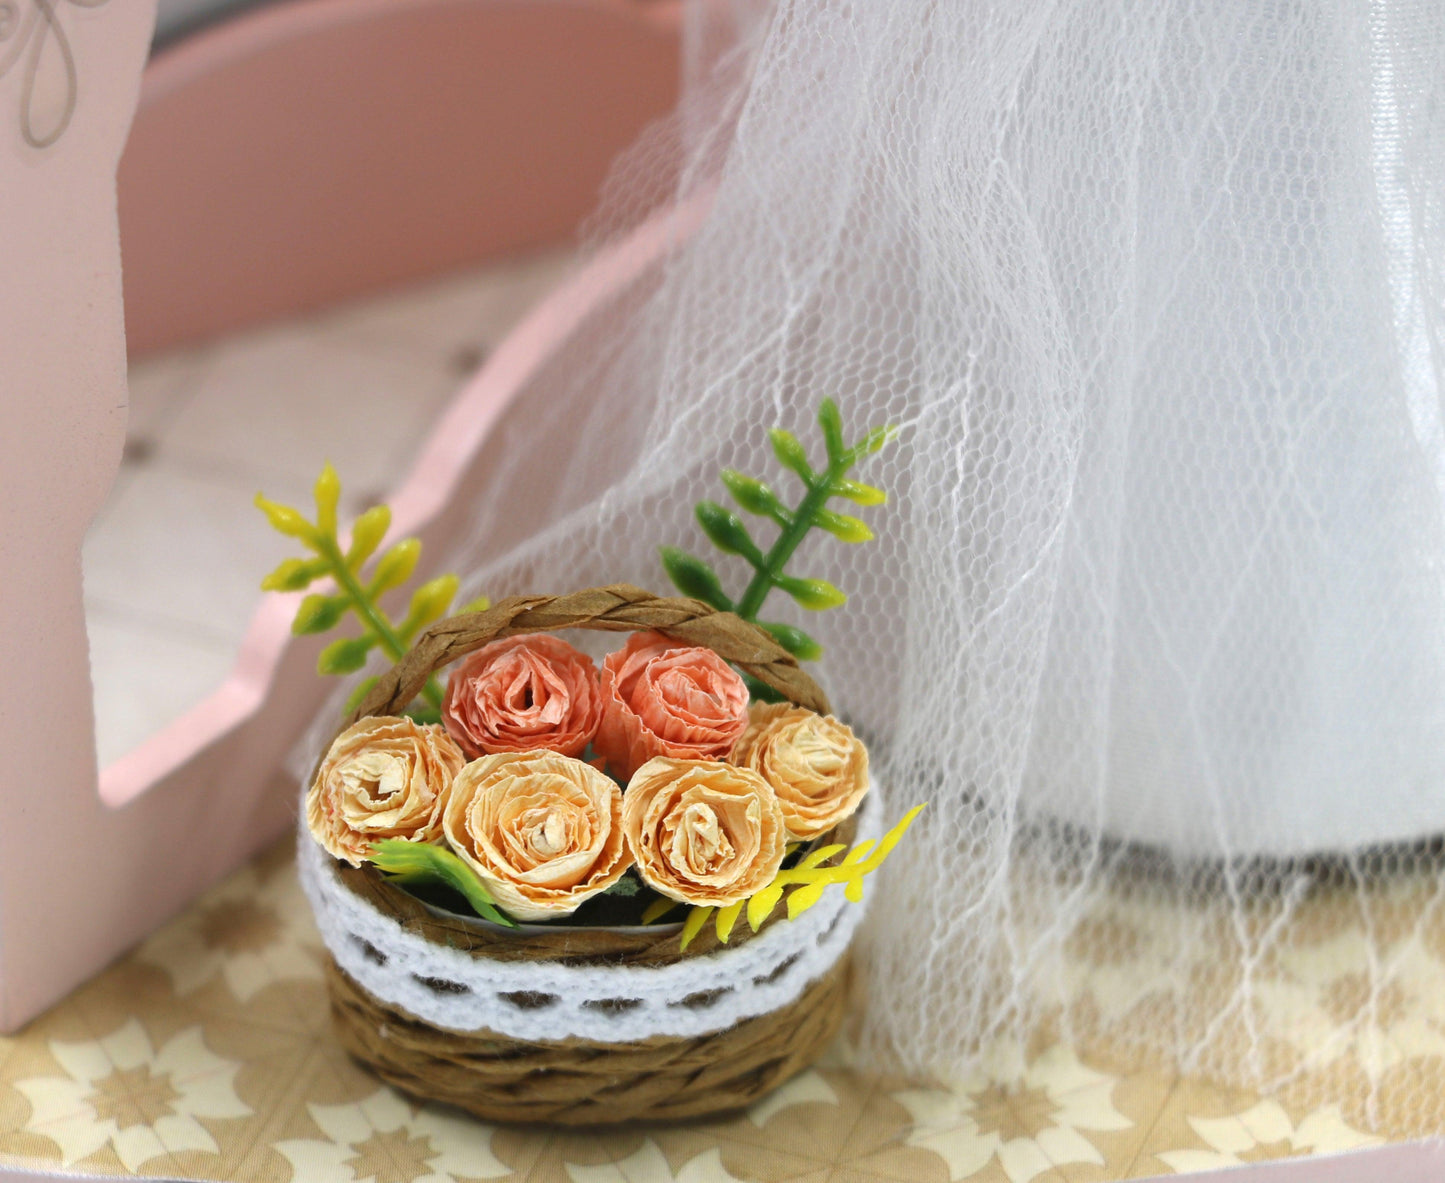 DIY Dollhouse Kit - 2 In 1 Wedding Scenery Miniature Marriage Dollhouse - Wedding Dollhouse Gifts - Wedding Gifts Bride Groom Gifts Birthday - Rajbharti Crafts